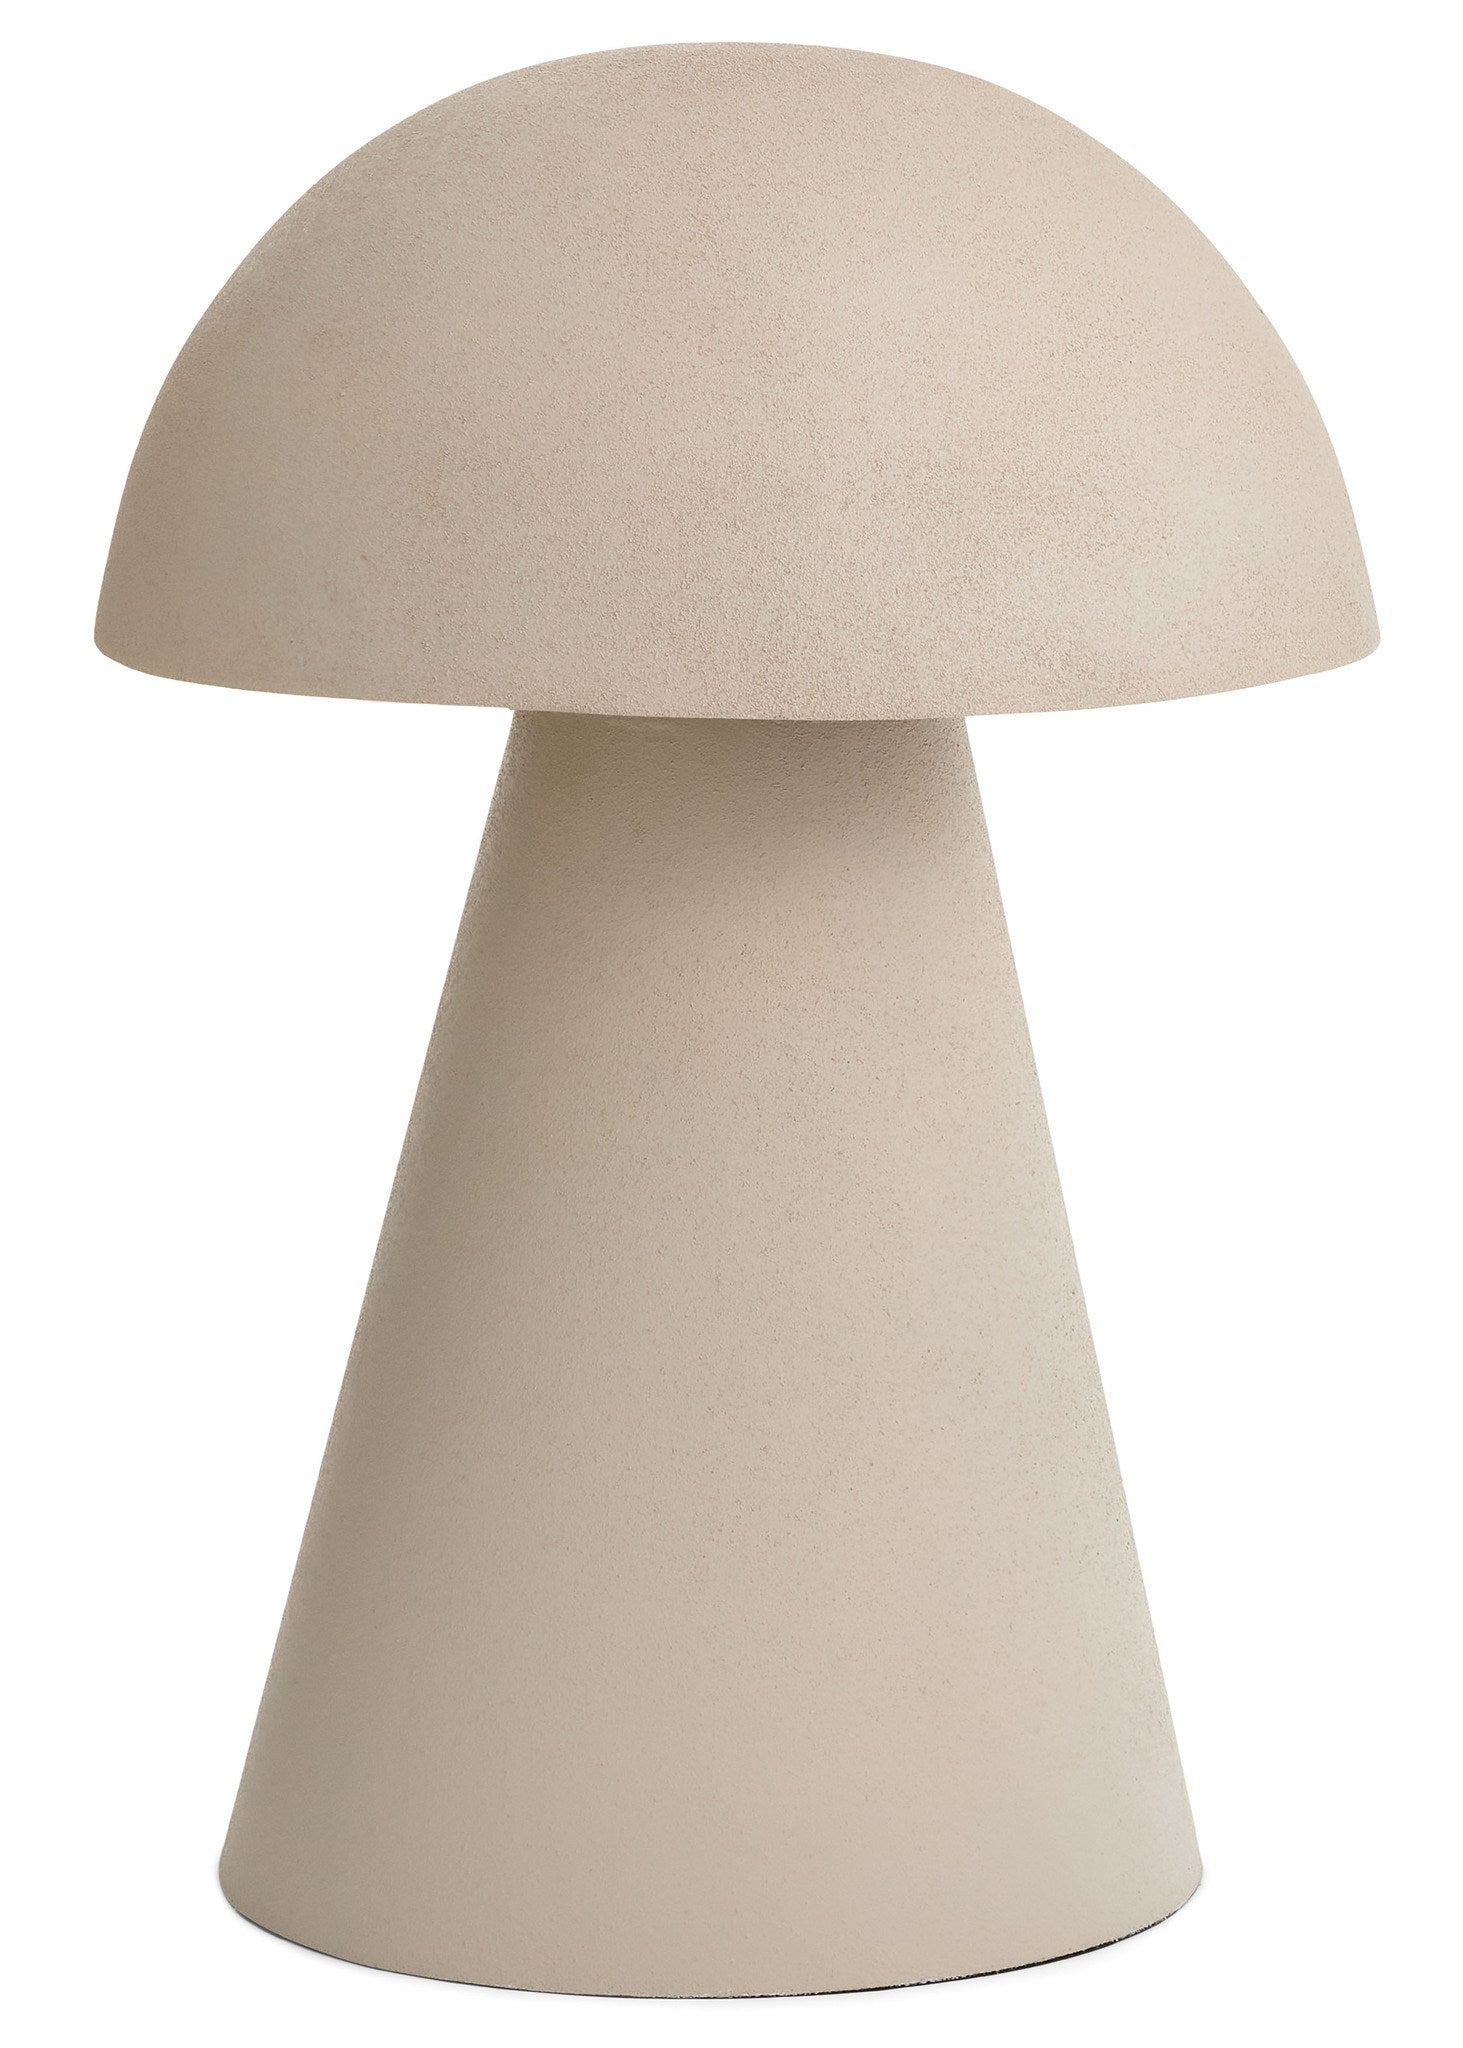 Lurice Tan Iron Mushroom Lamp